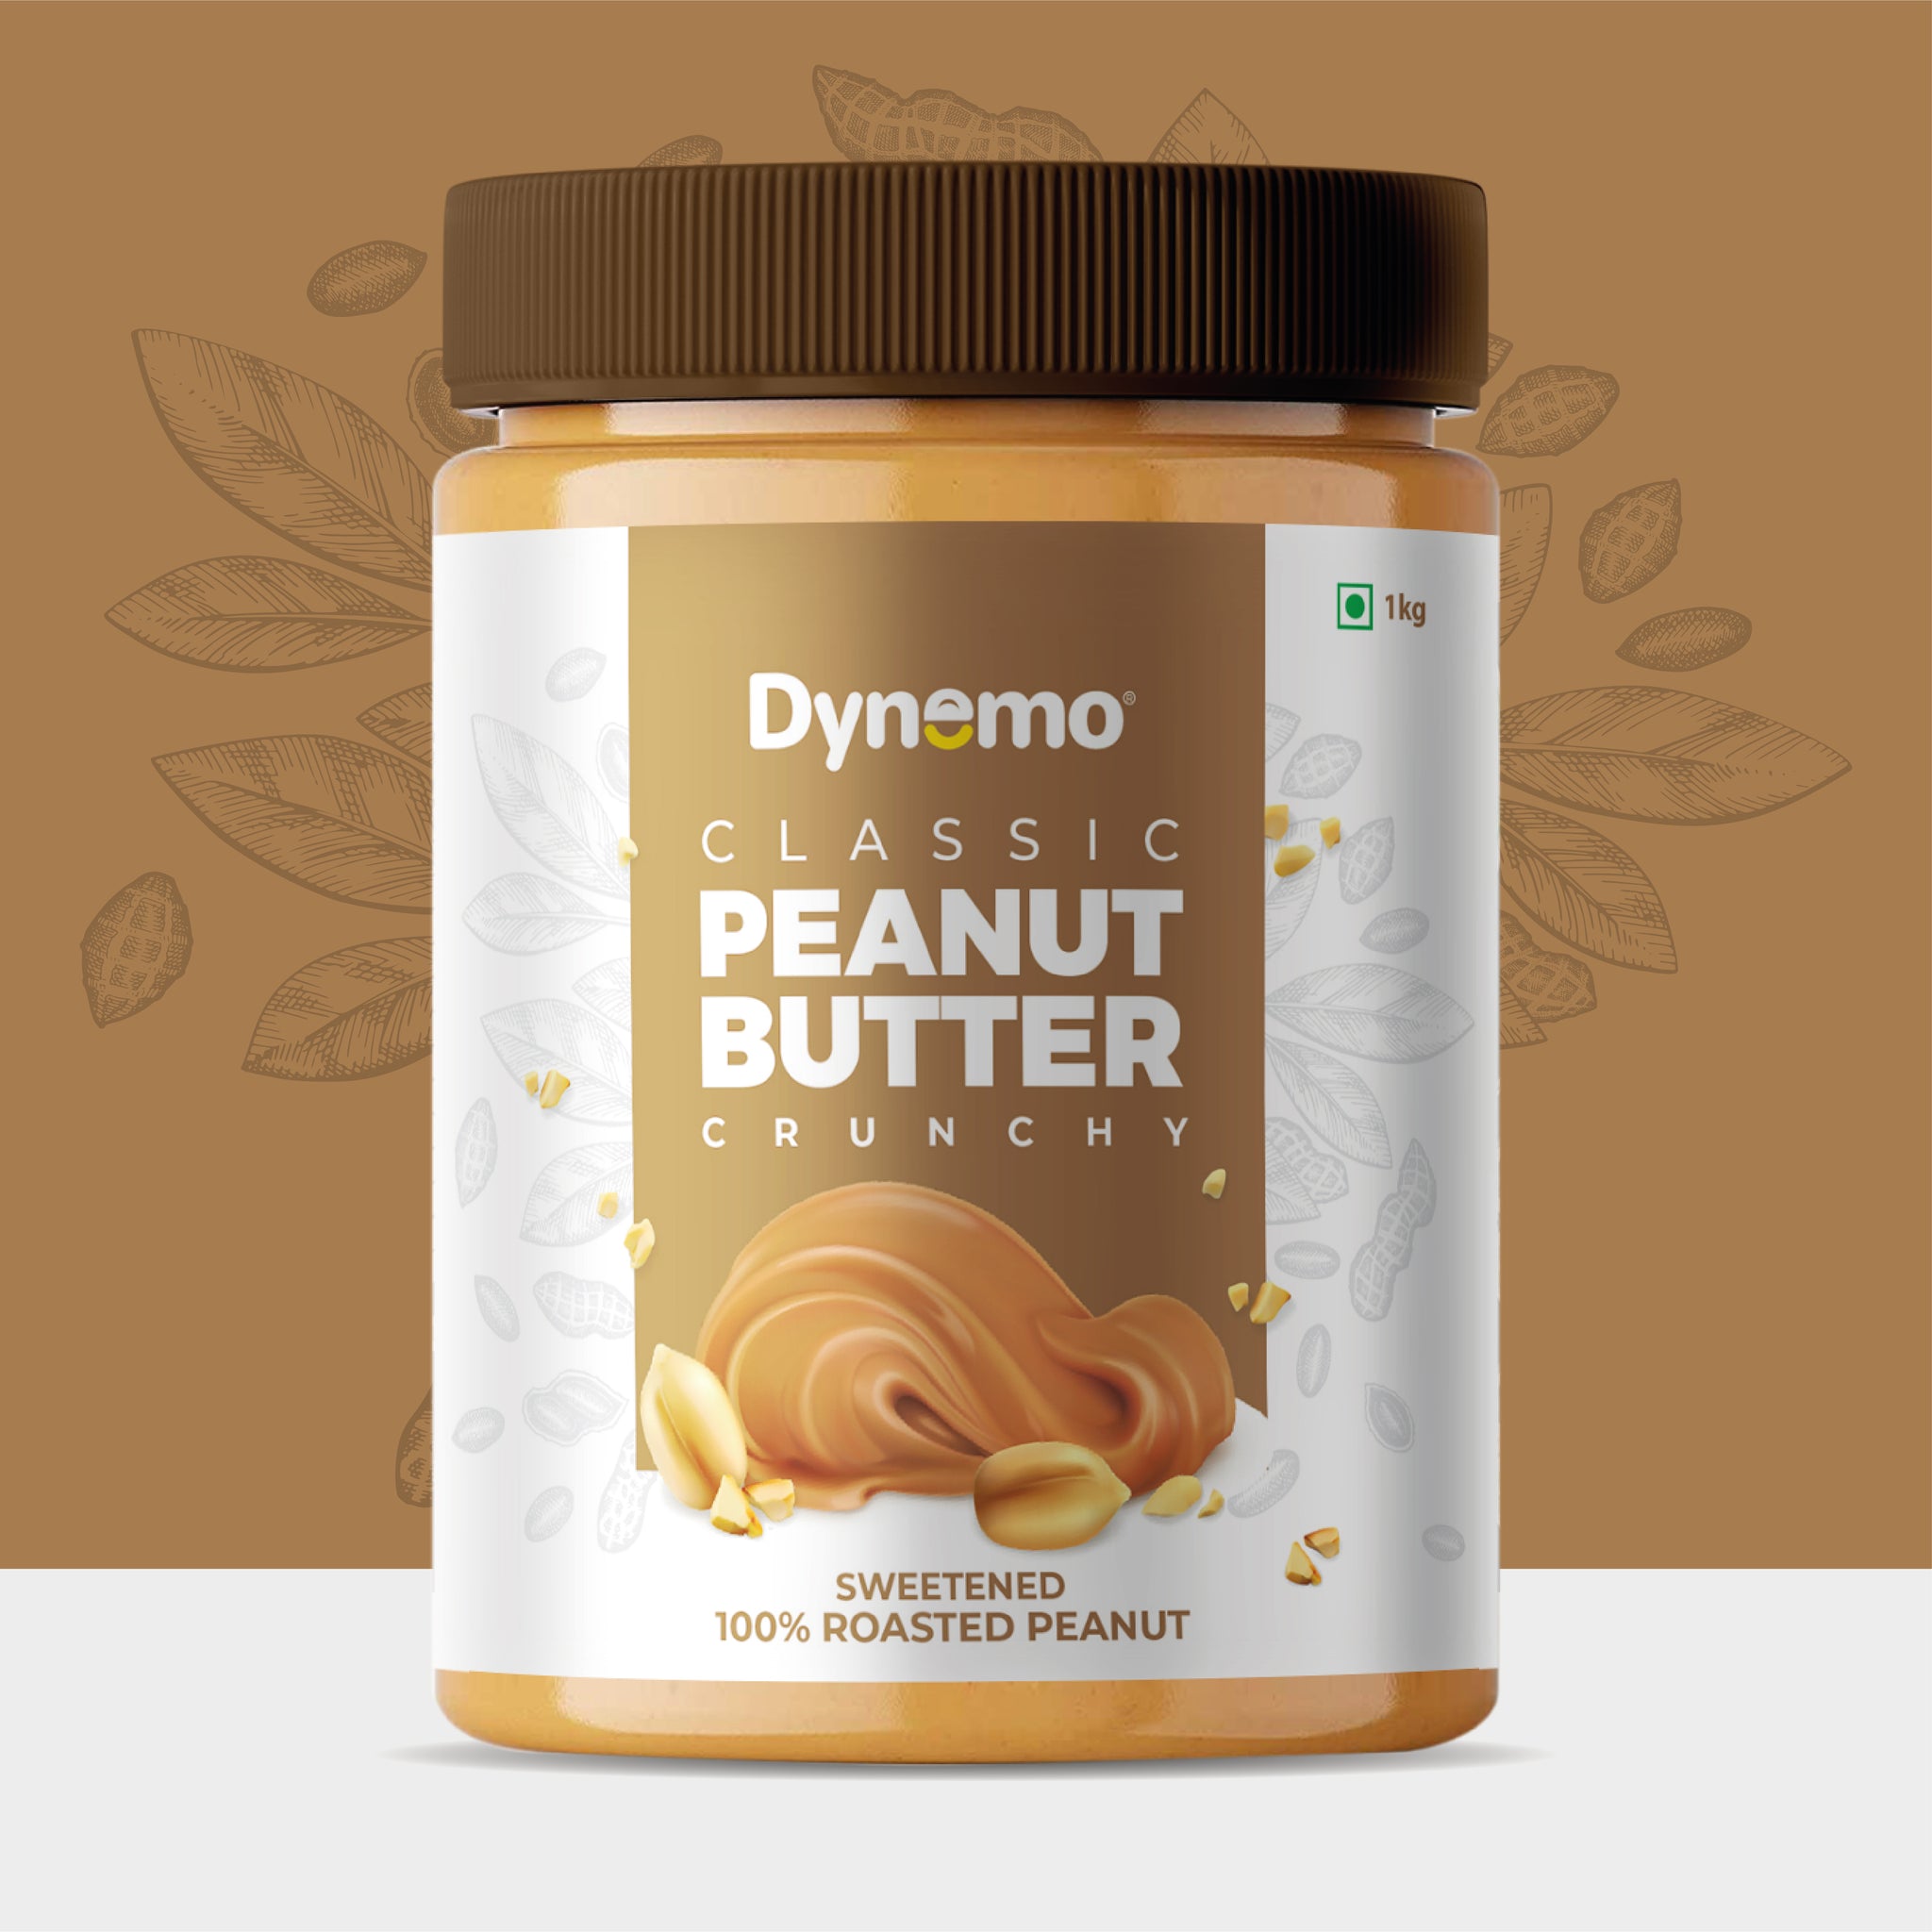 Dynemo Classic Crunchy Peanut Butter